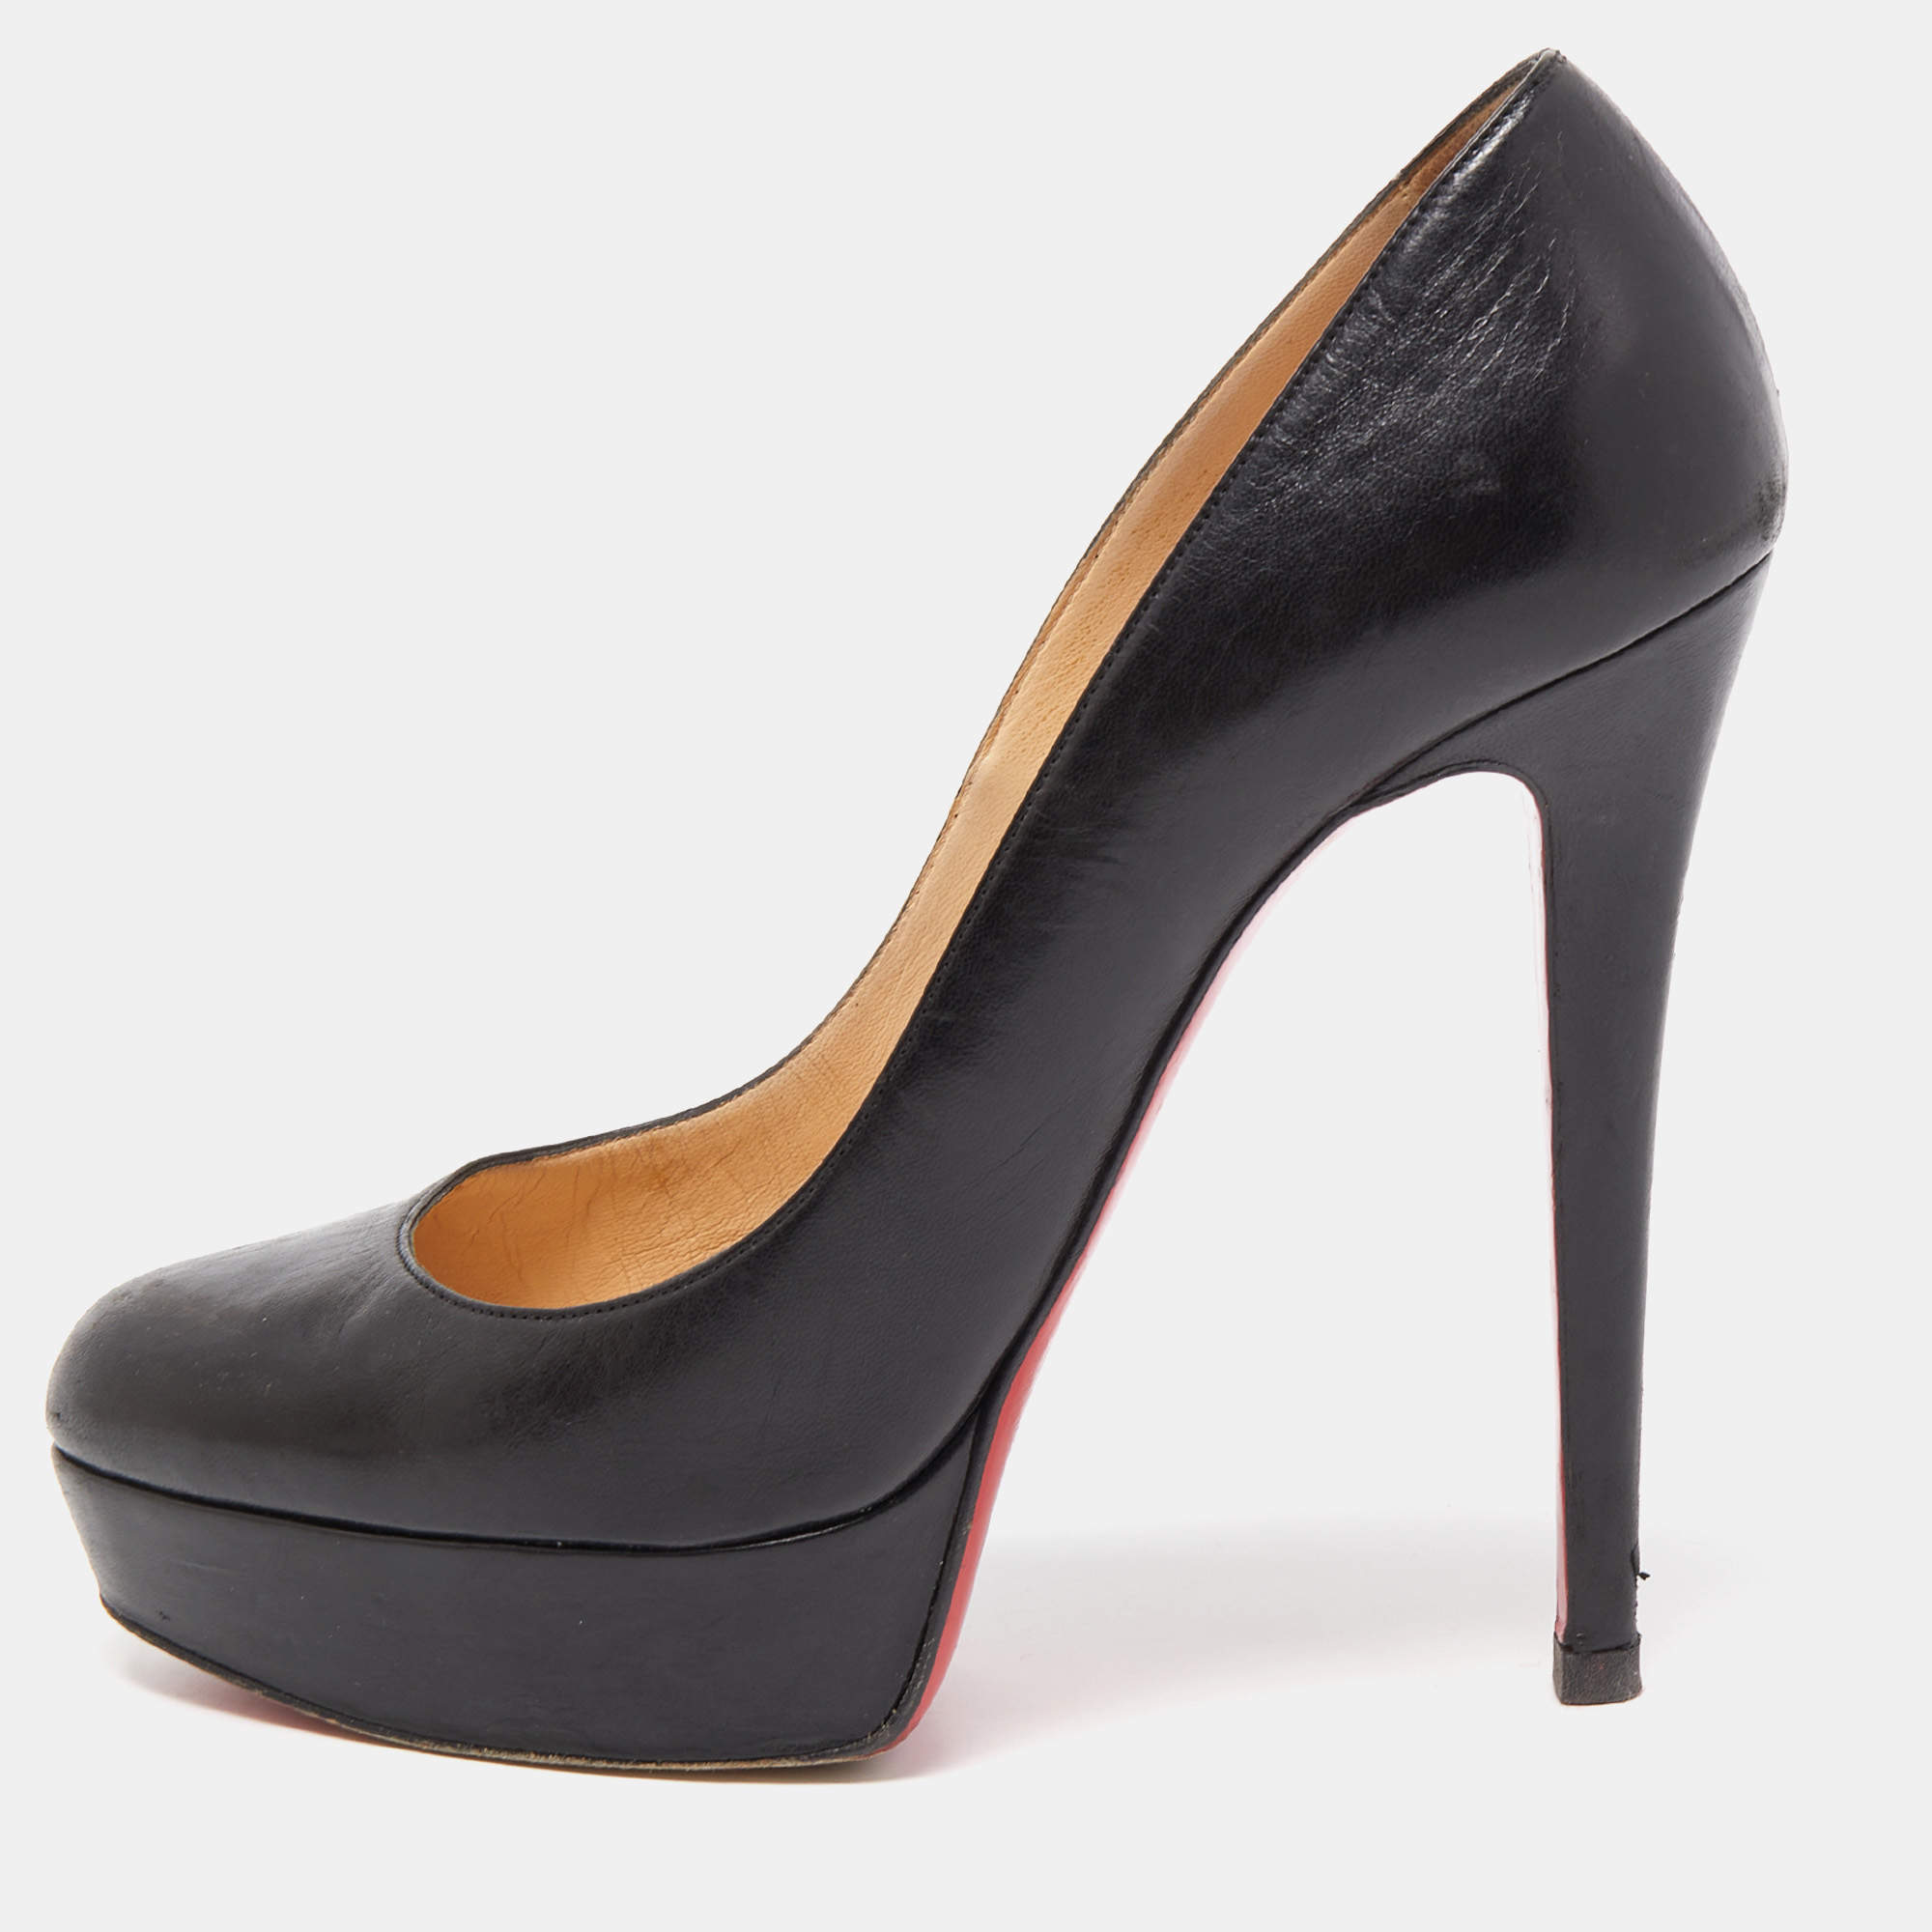 Bianca leather heels Christian Louboutin Black size 39.5 EU in Leather -  33141007